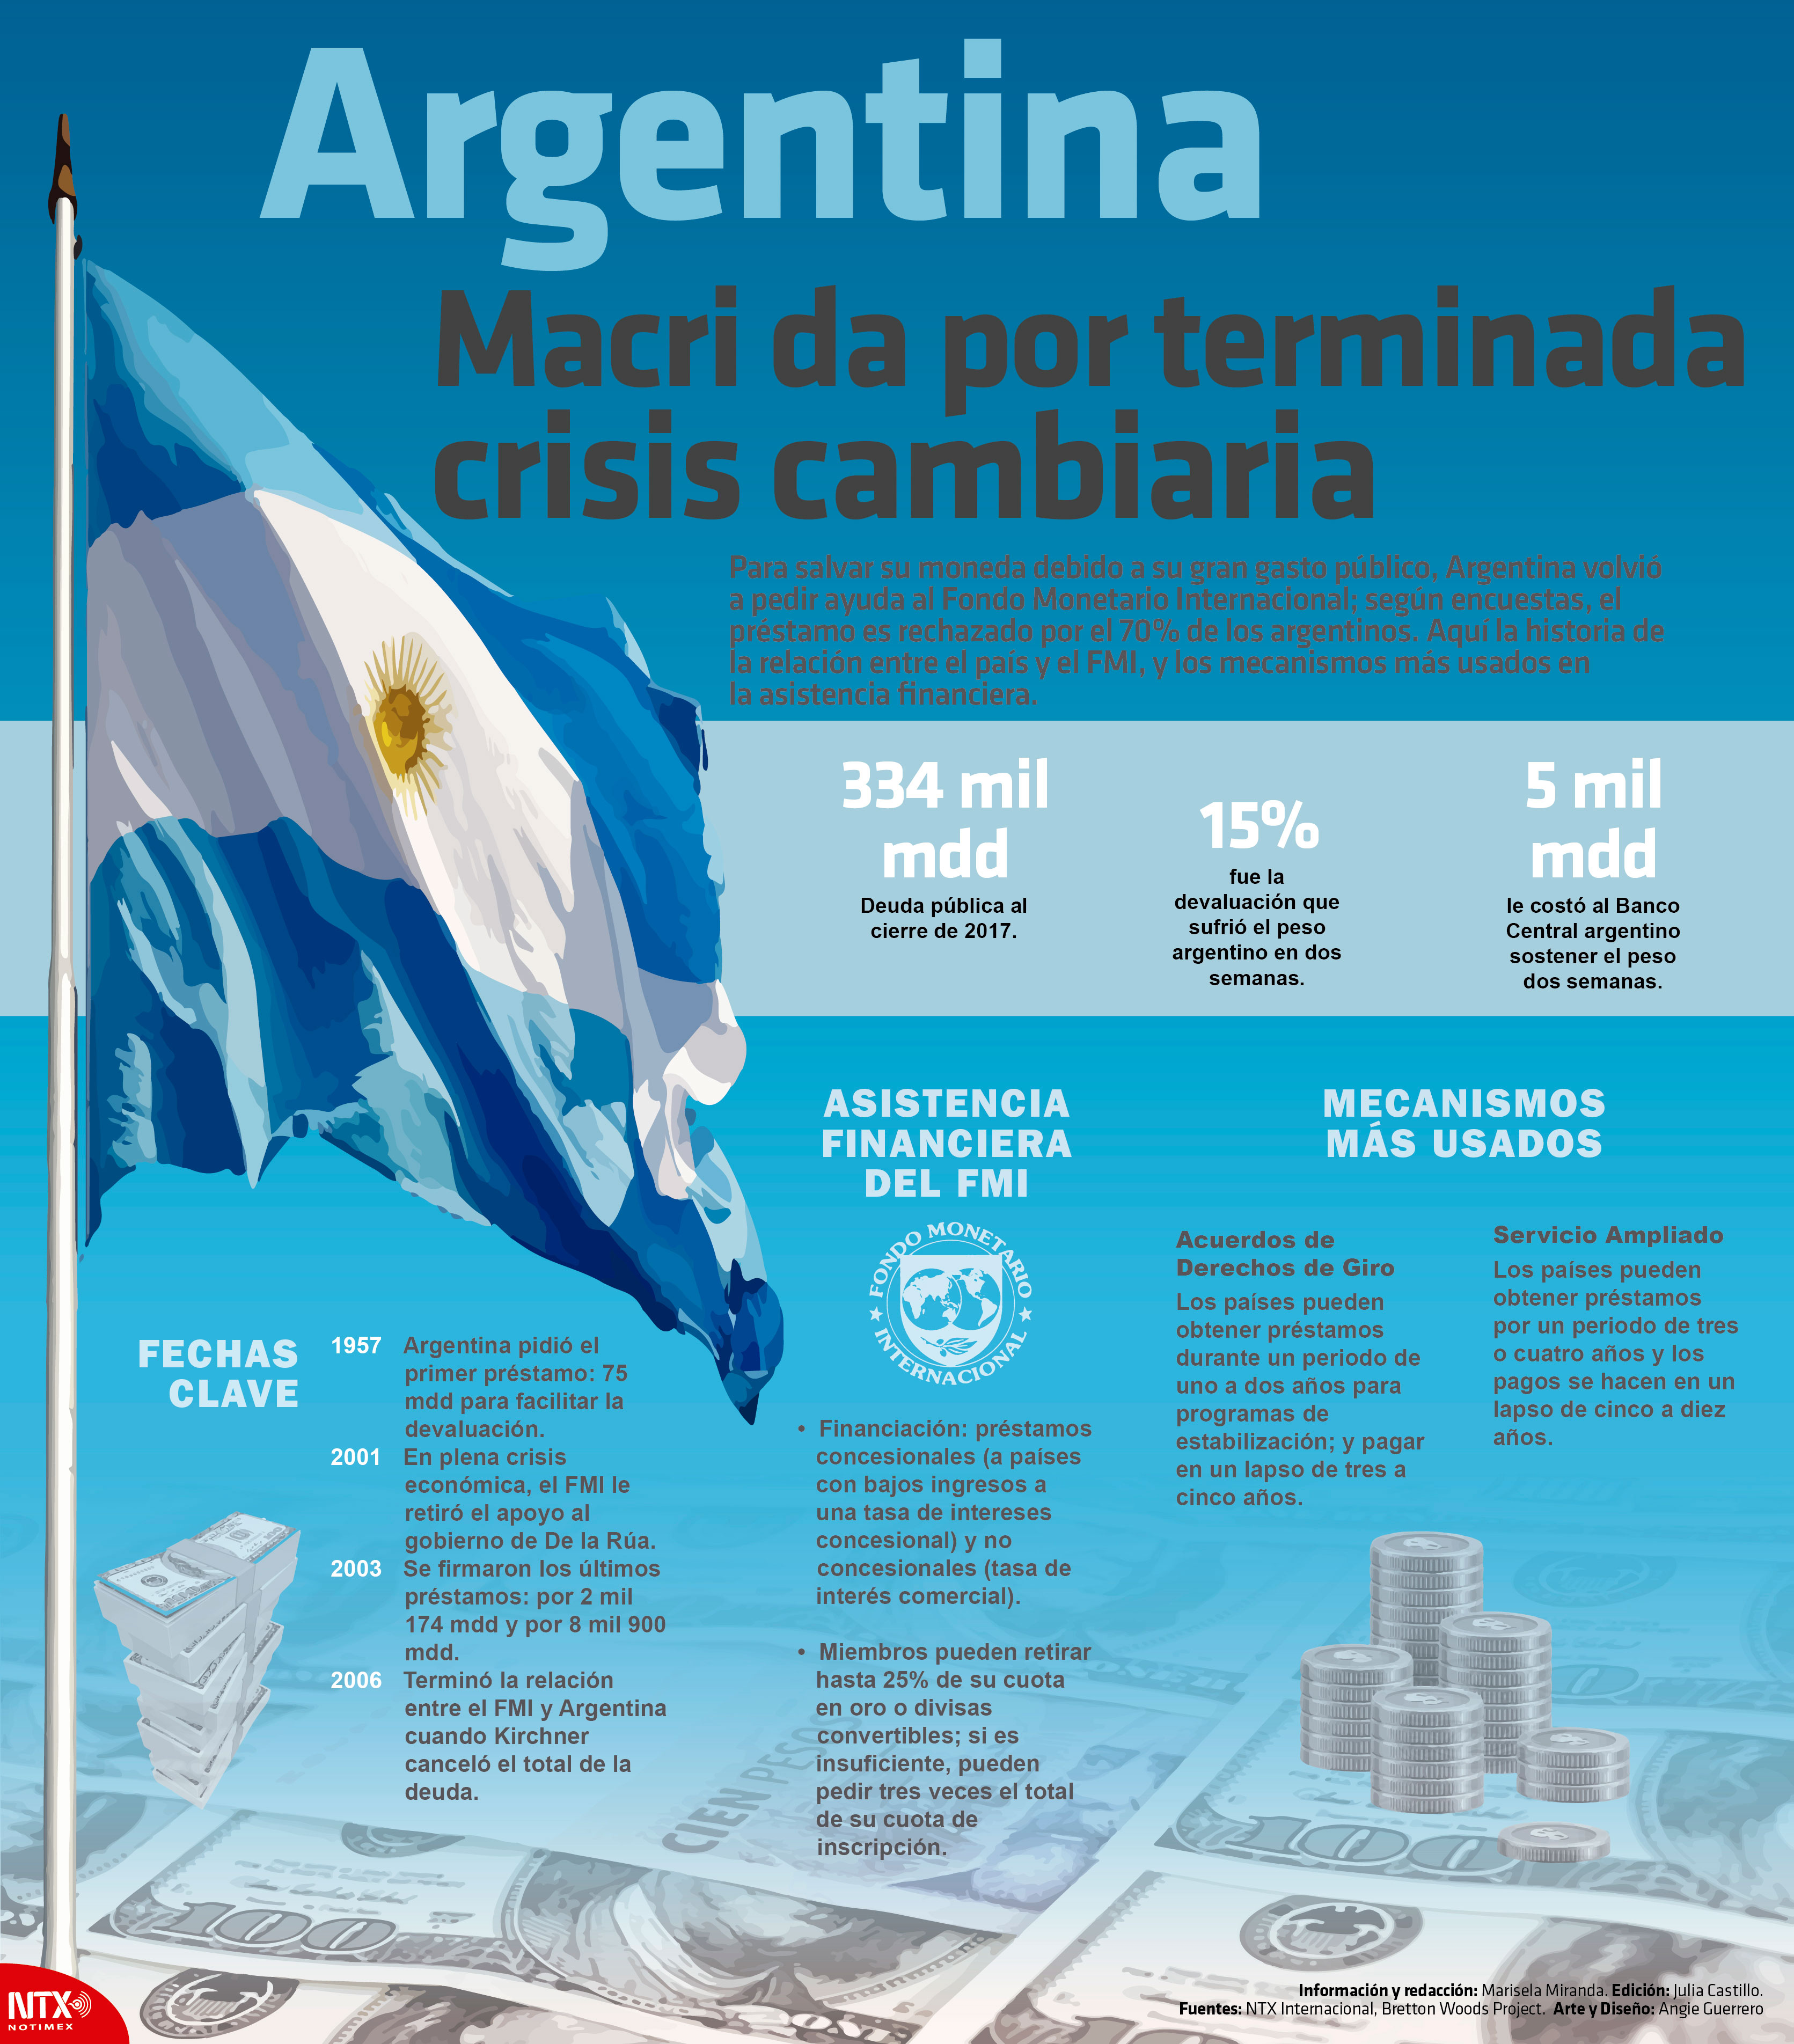 Argentina, Macri da por terminada crisis cambiaria 